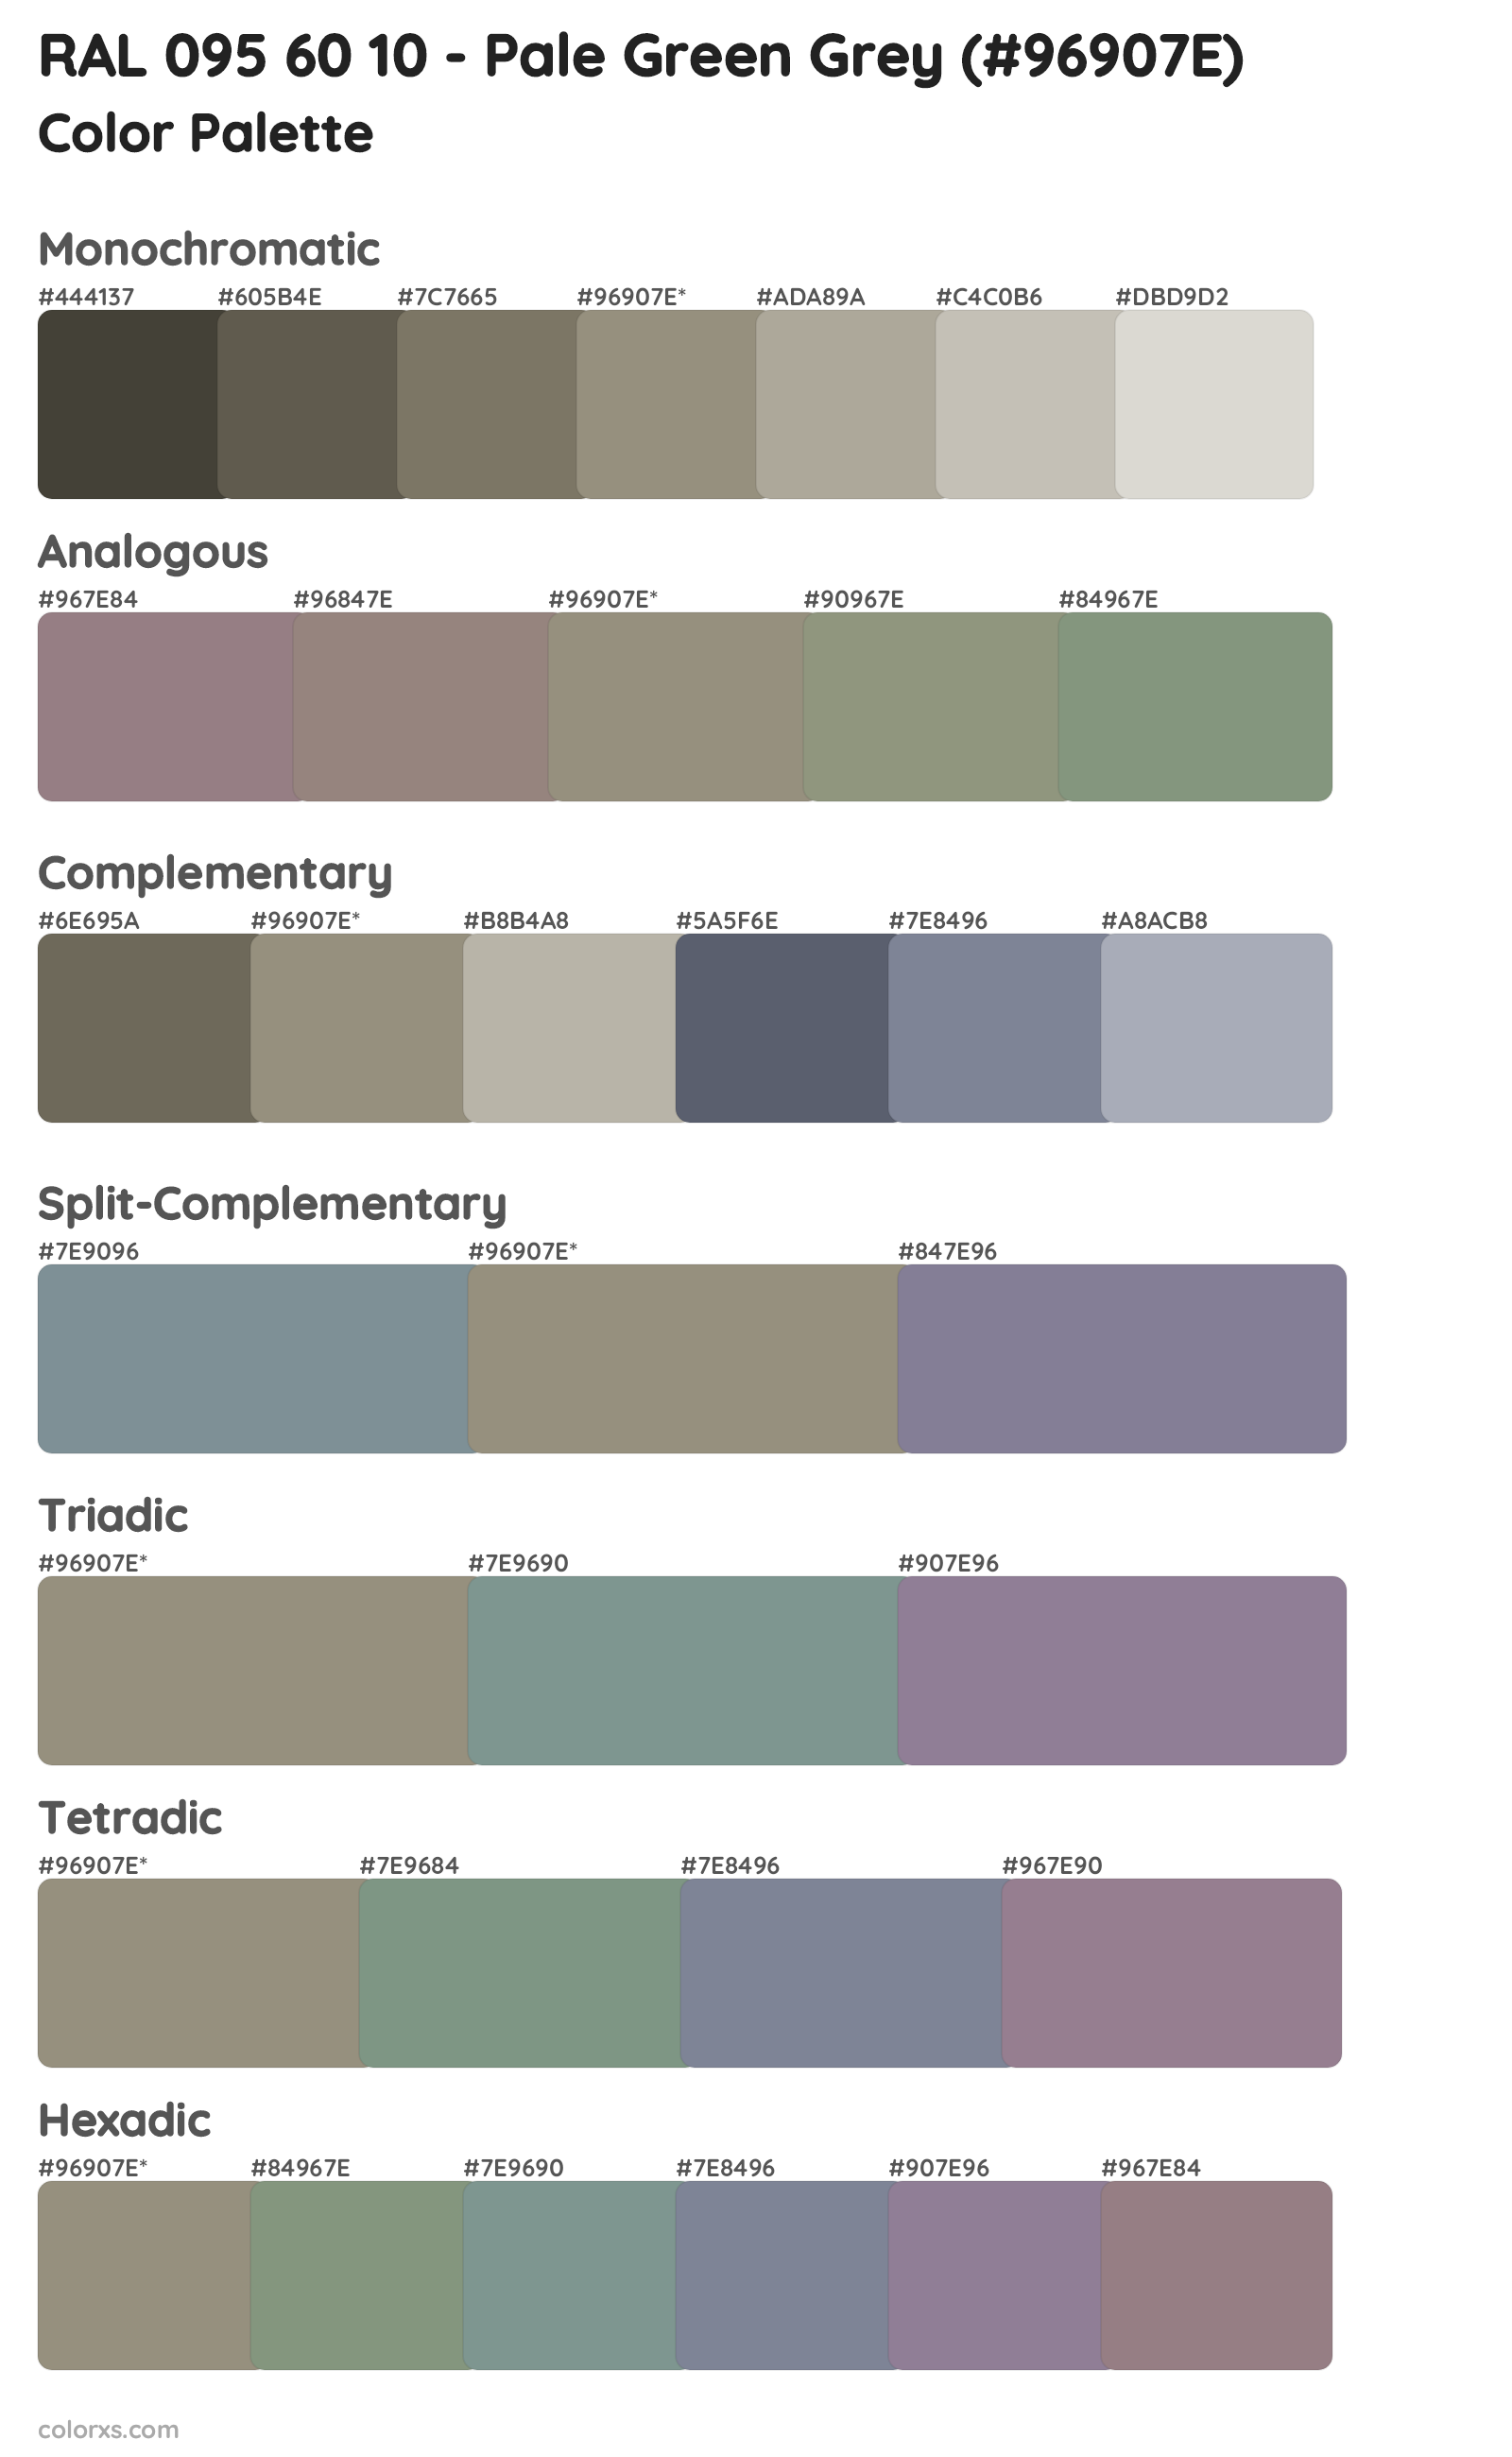 RAL 095 60 10 - Pale Green Grey Color Scheme Palettes